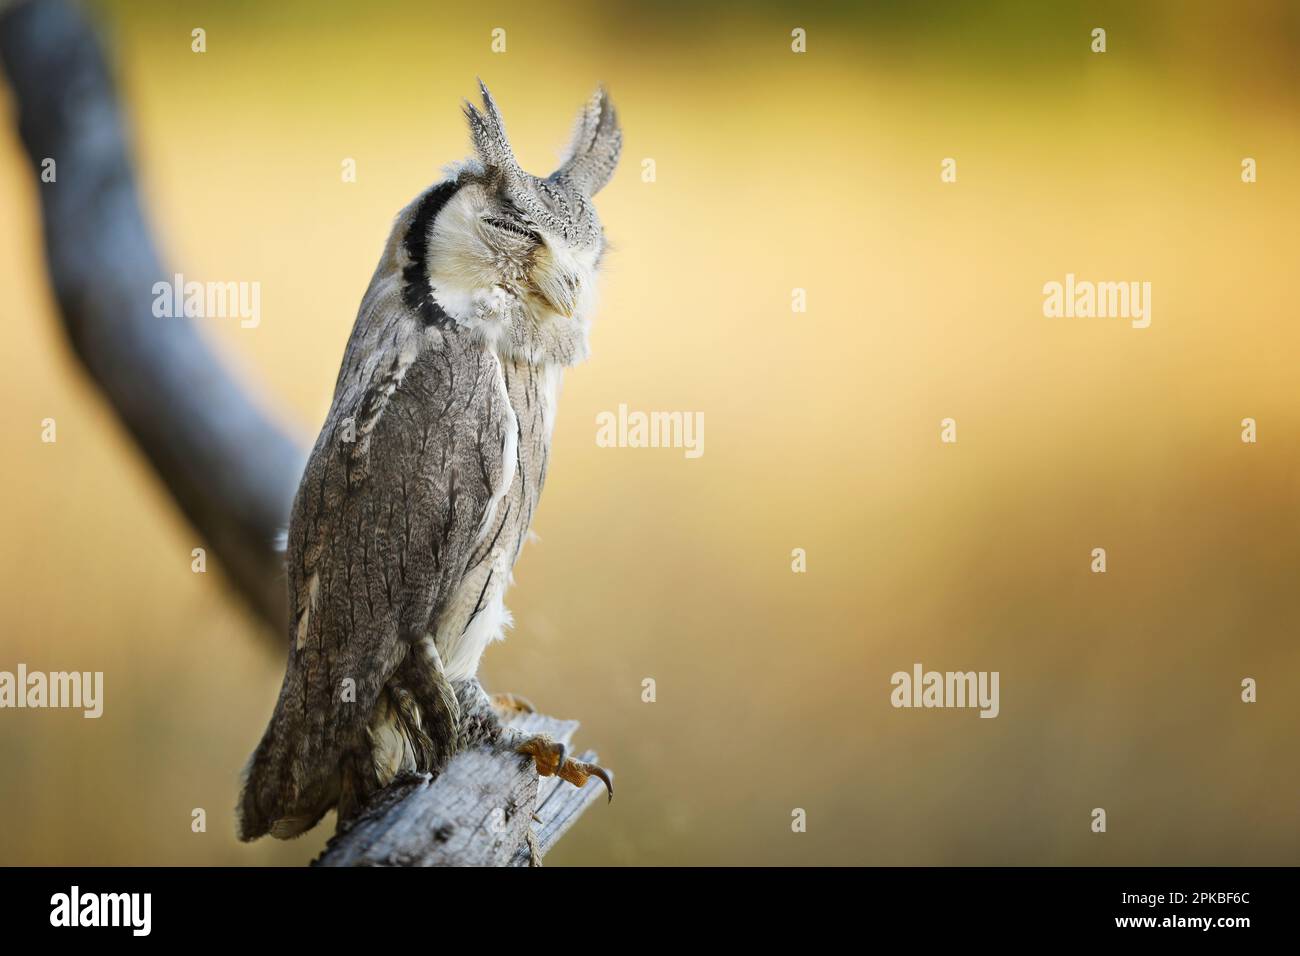 Northern white-faced owl, Otus leucotis, bird in the nature habitat. Owl in african savanna. Animal sitting on the tree branch. Wildlife scene from Af Stock Photo